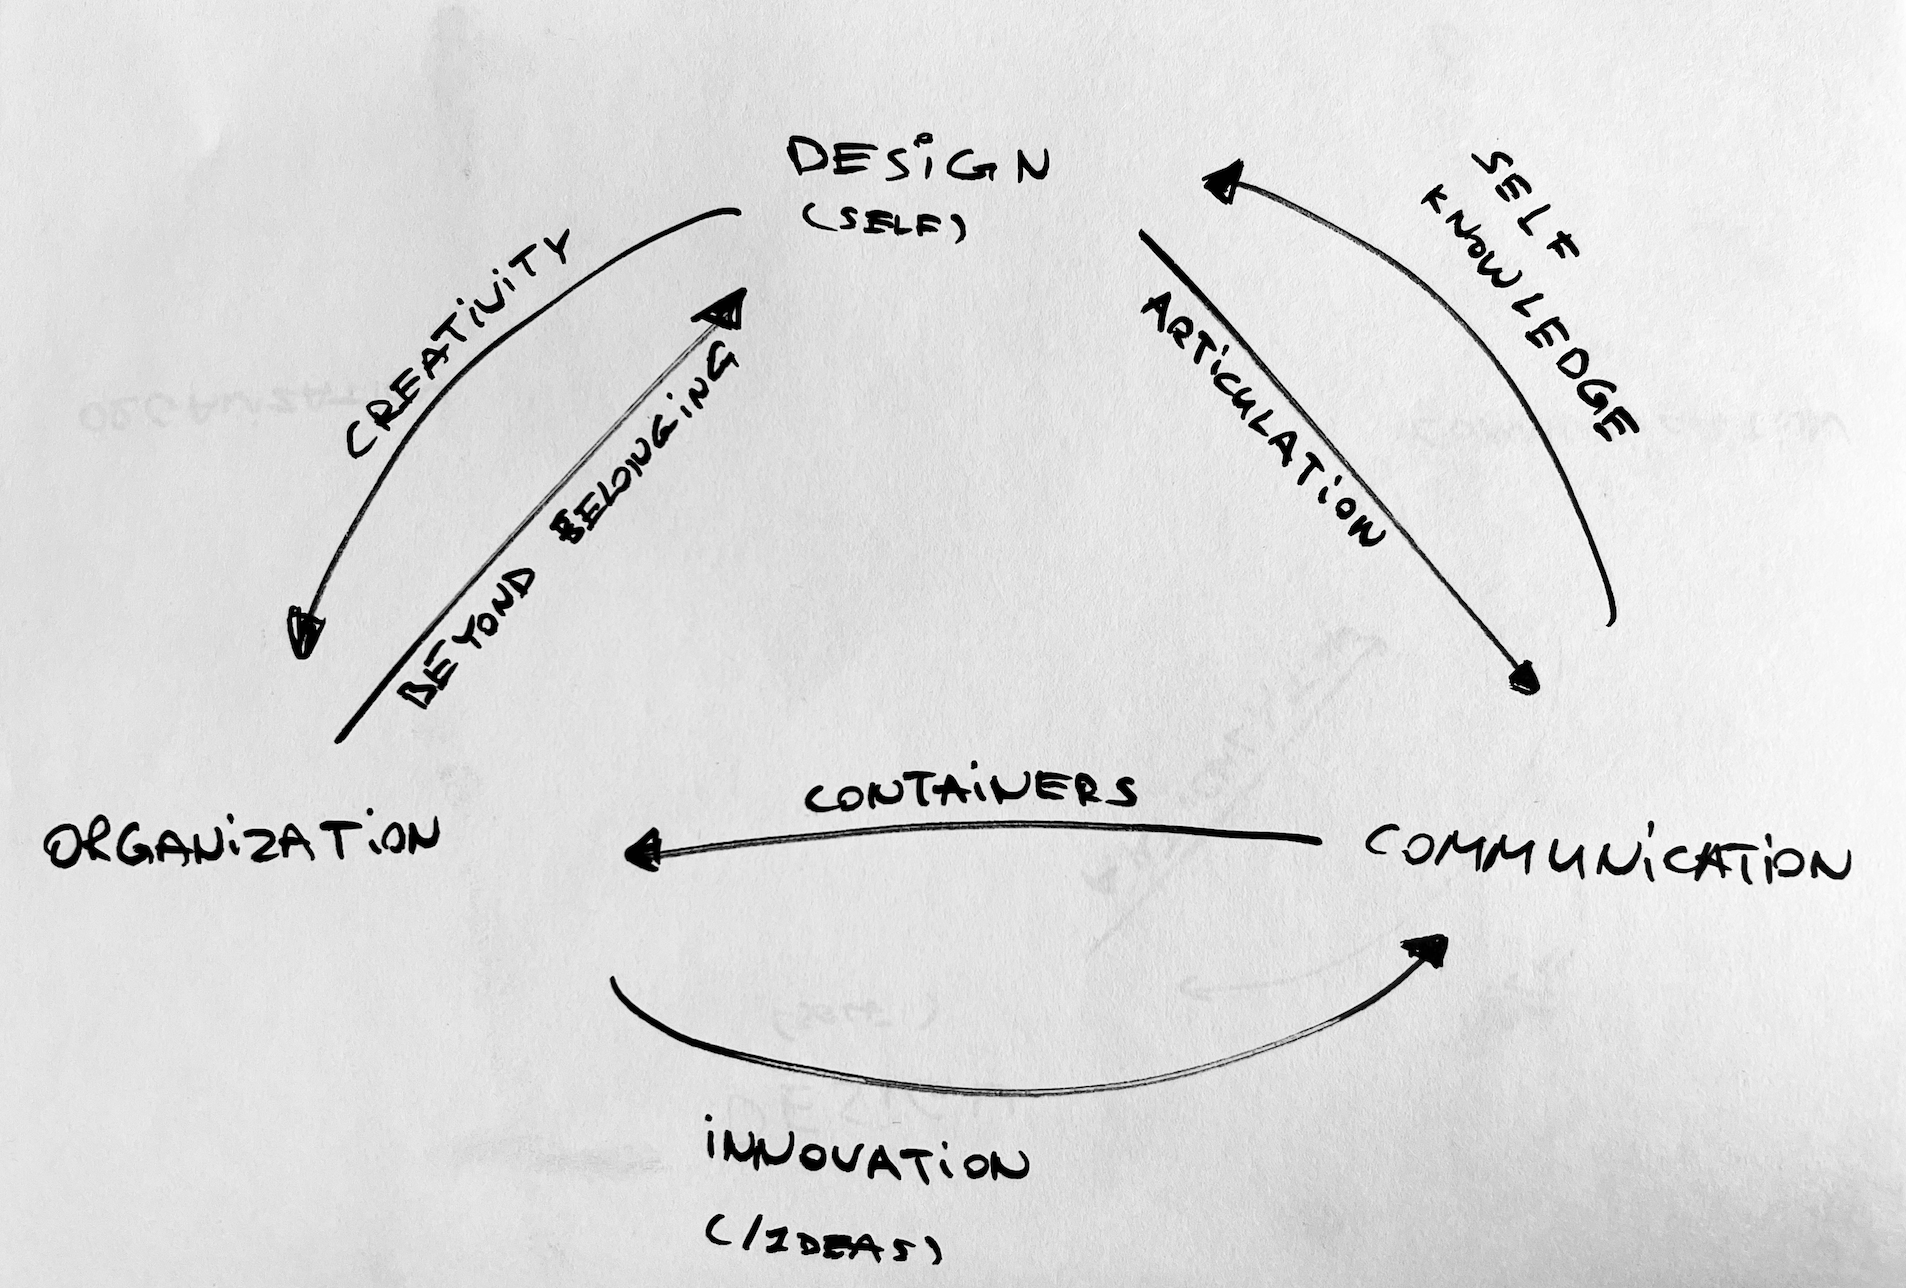 graphic of design, communication and organization.jpeg